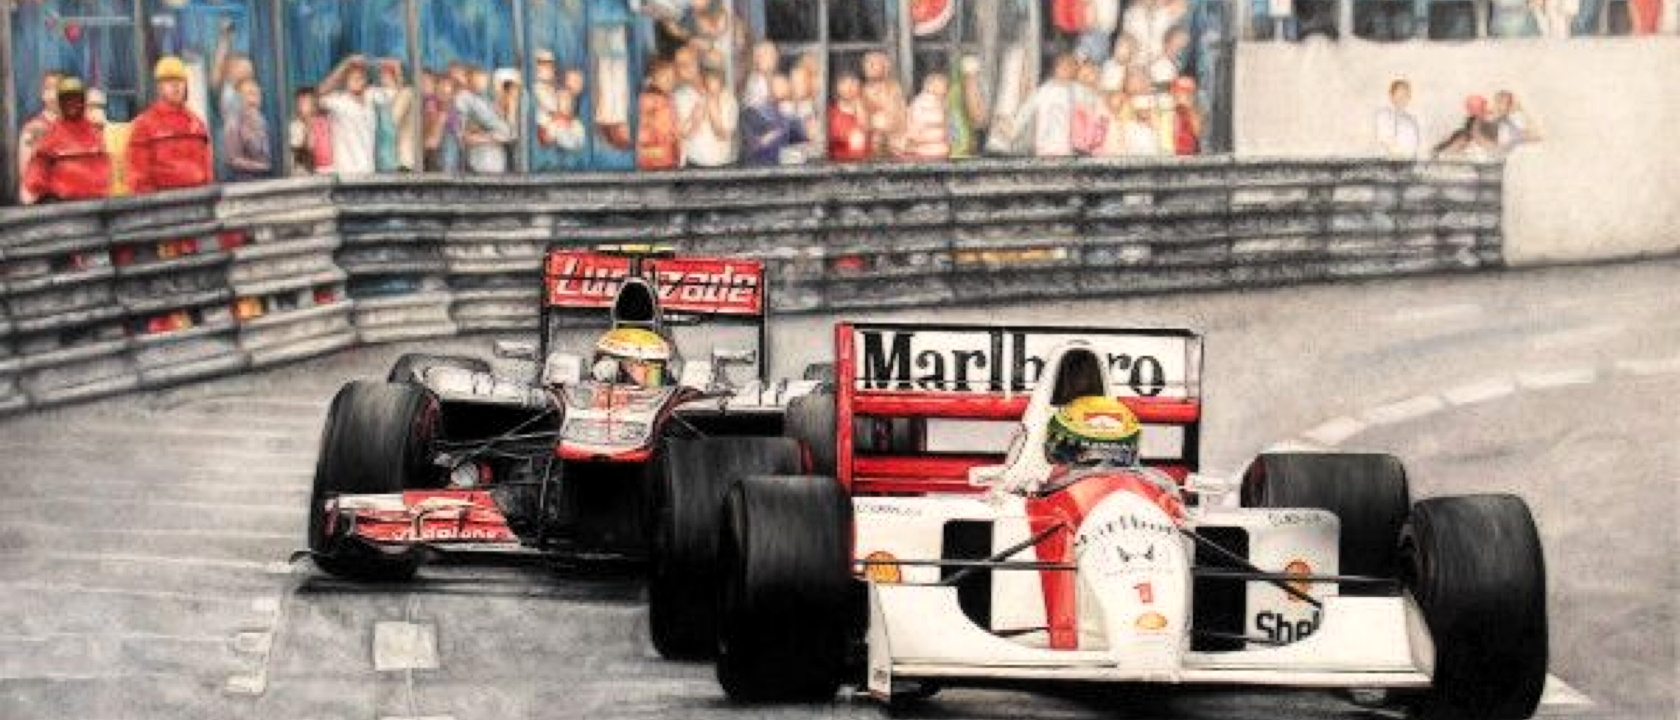 How Lewis Hamilton's F1 record compares to Ayrton Senna's